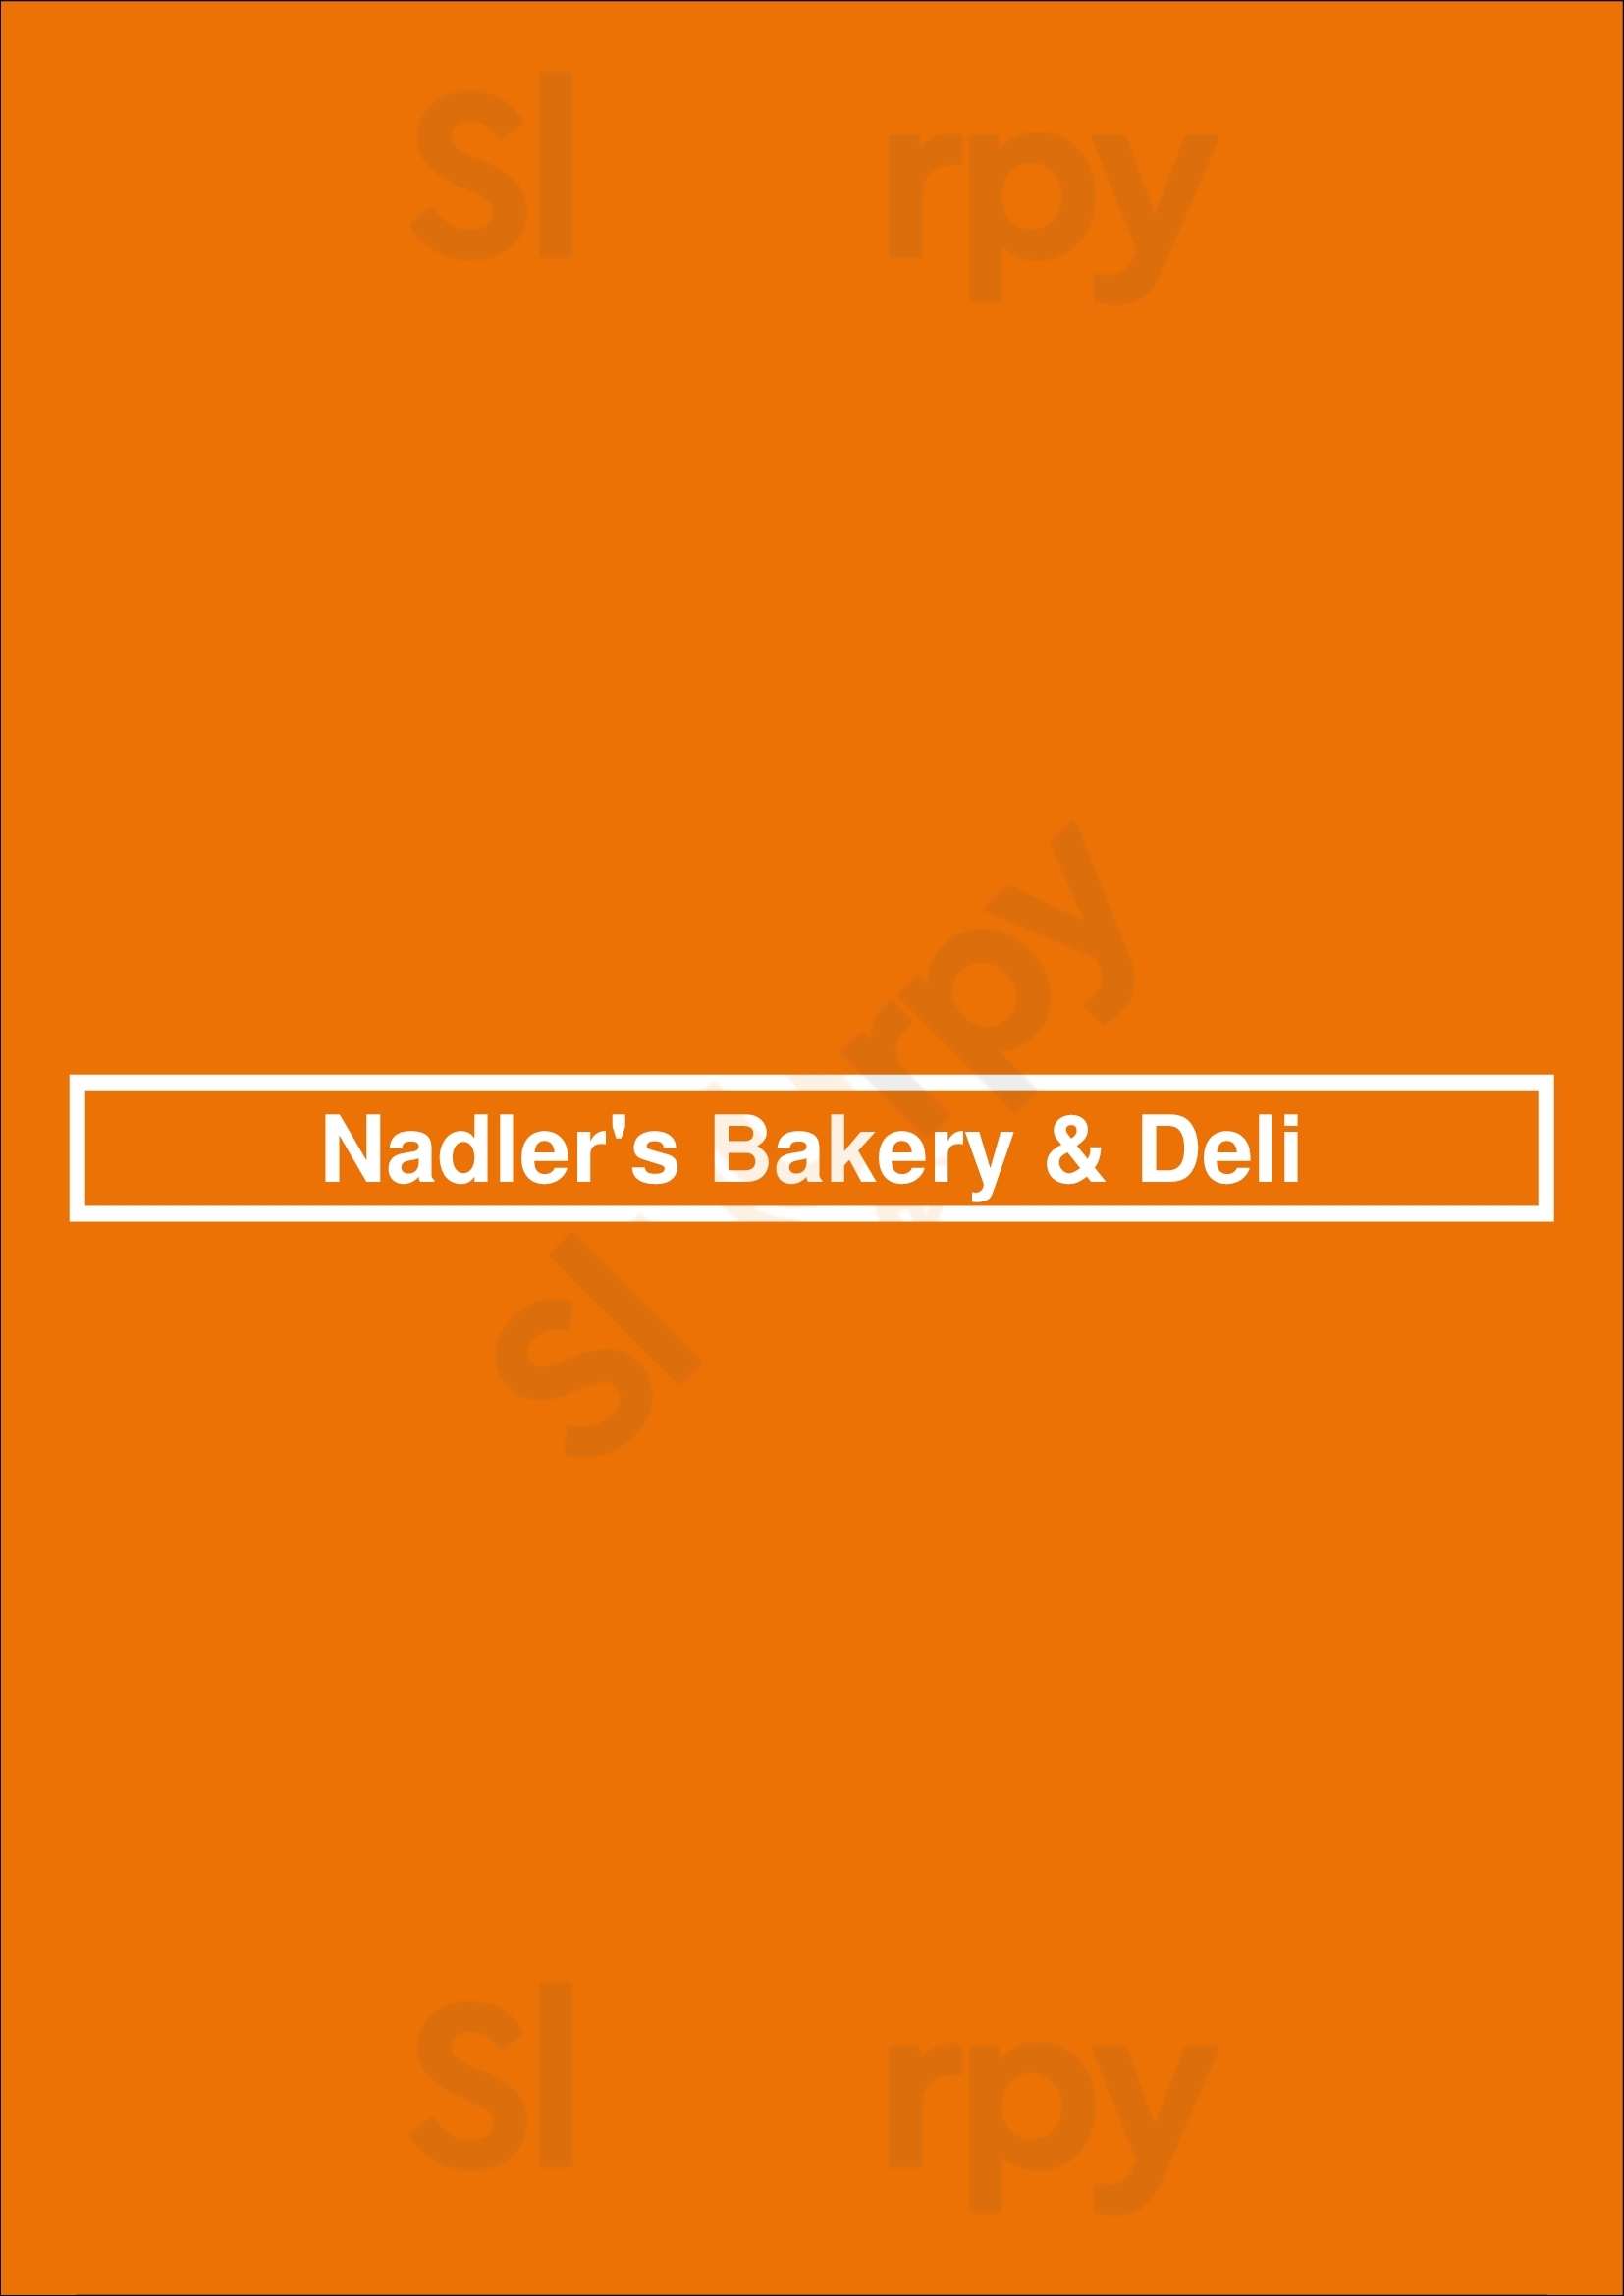 Nadler's Bakery & Deli San Antonio Menu - 1